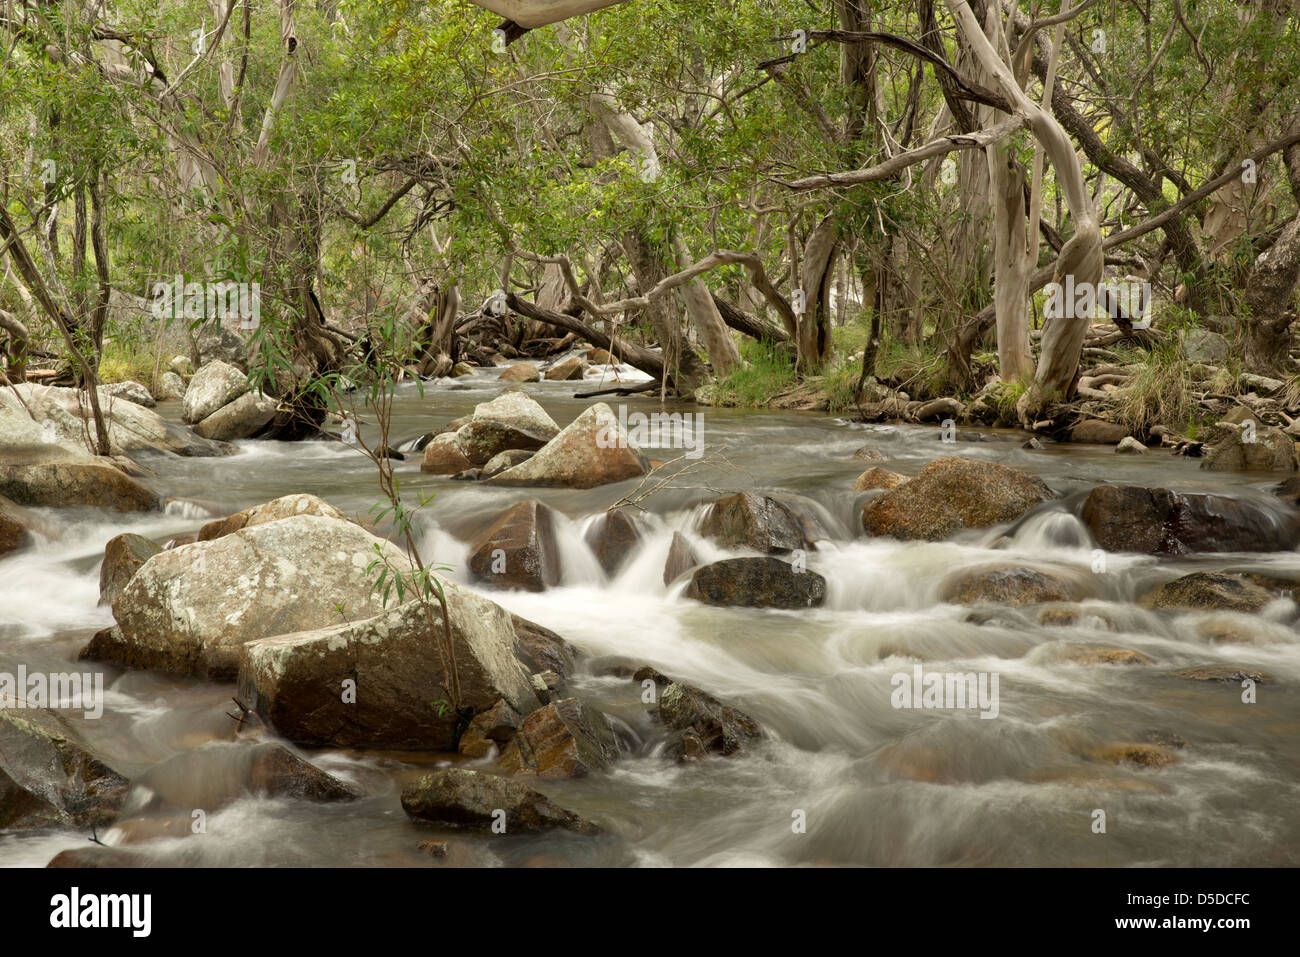 Wandern entlang der Emerald Creek in der Nähe von Mareeba, Queensland Australien Stockfoto